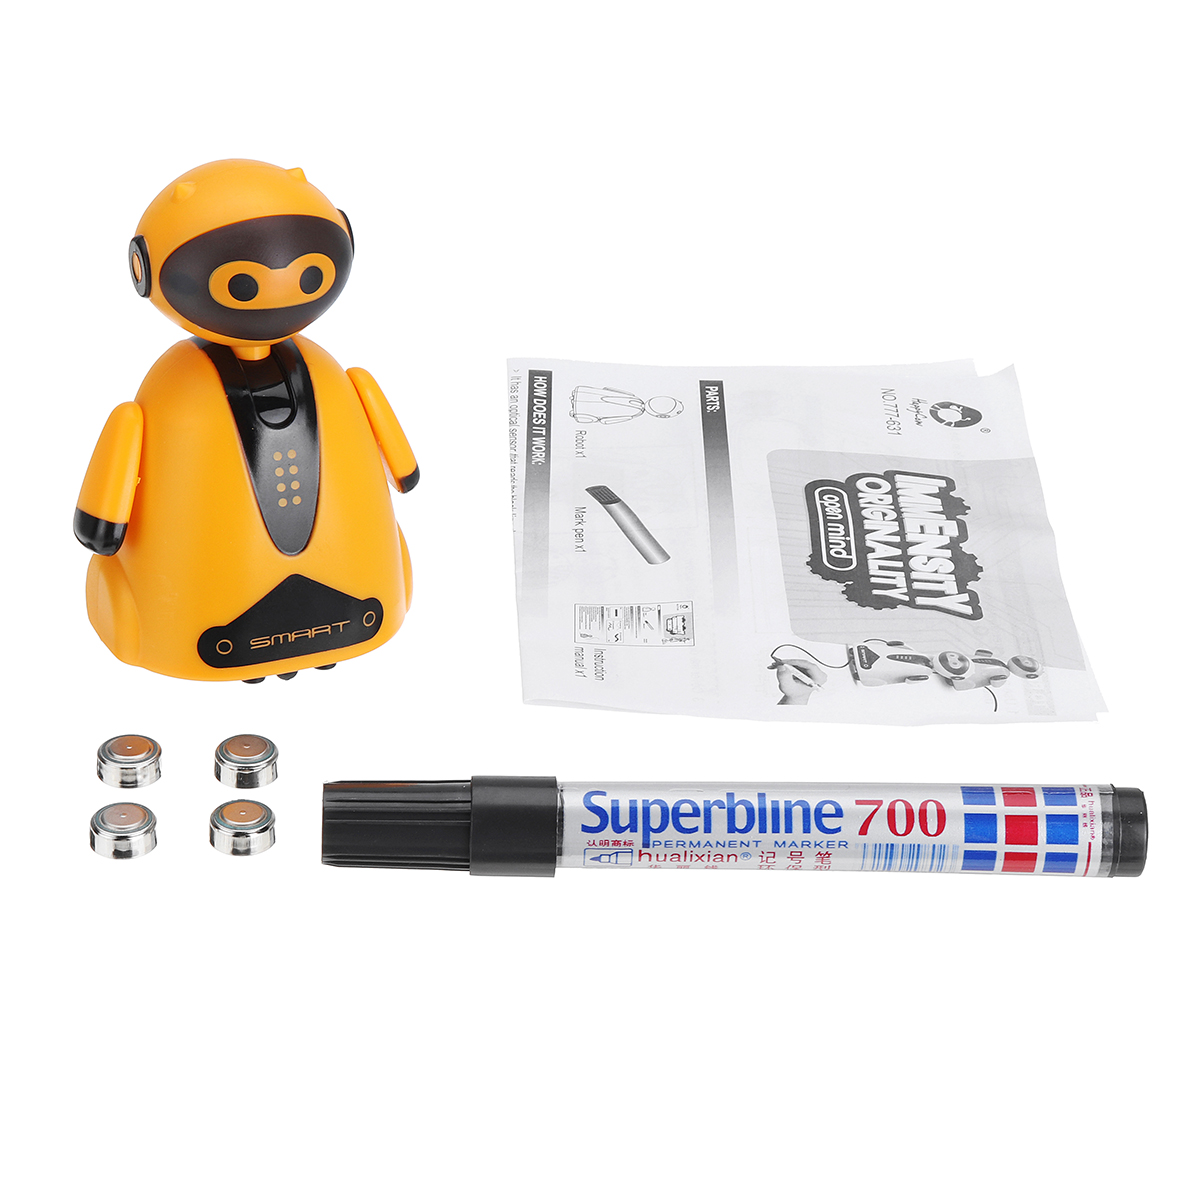 Mini-Inductive-Robot-Follow-Magic-Pen-Drawn-Line-Electric-Kids-Child-Toys-Gifts-1521133